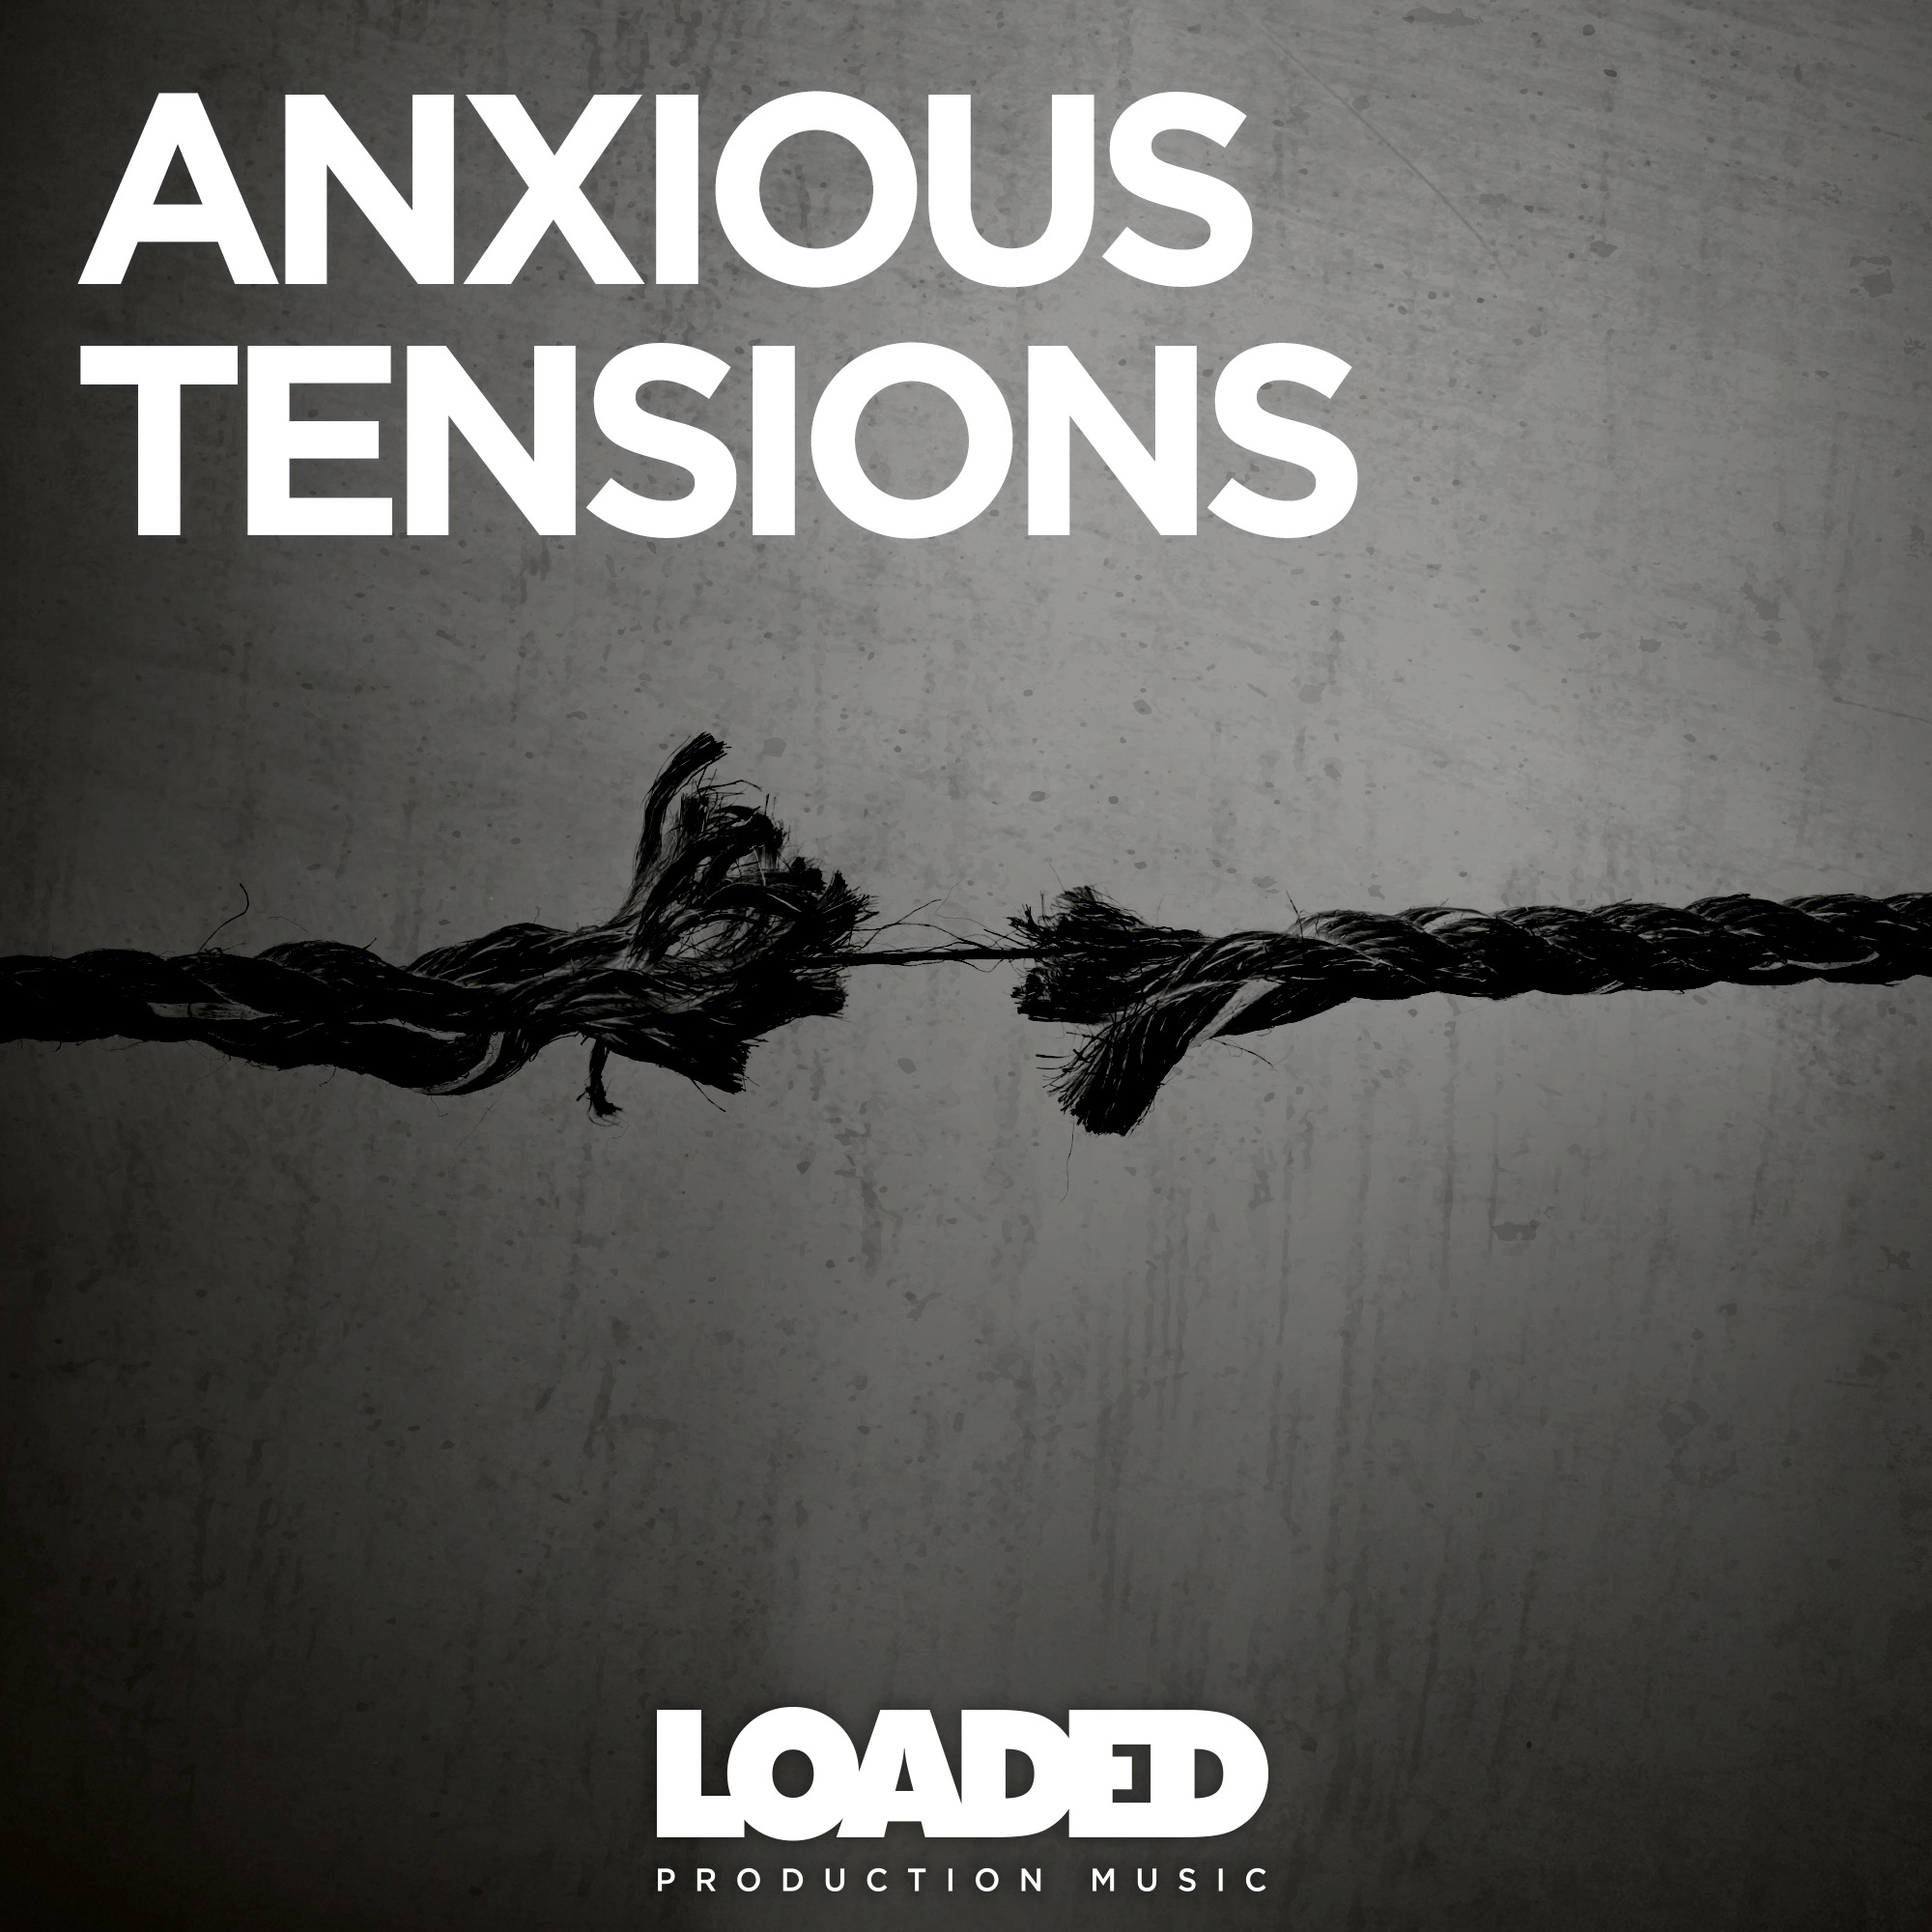 LPM 112 - Anxious Tensions - Album Cover